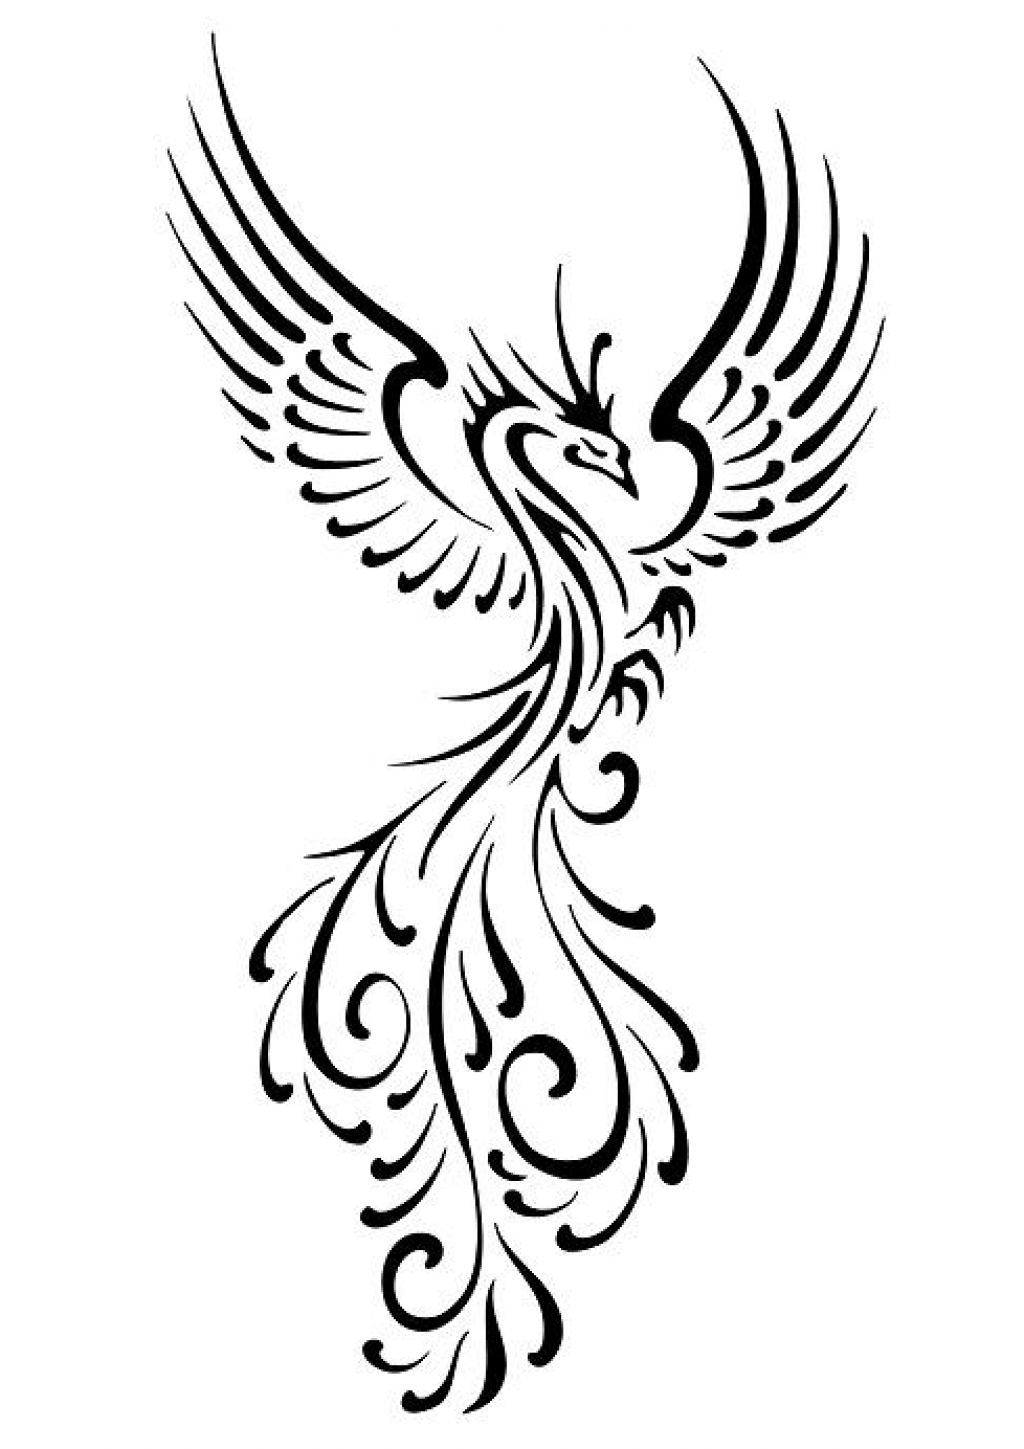 Japanese Phoenix Tattoo Designs - Tattoo Ink - ClipArt Best - ClipArt Best